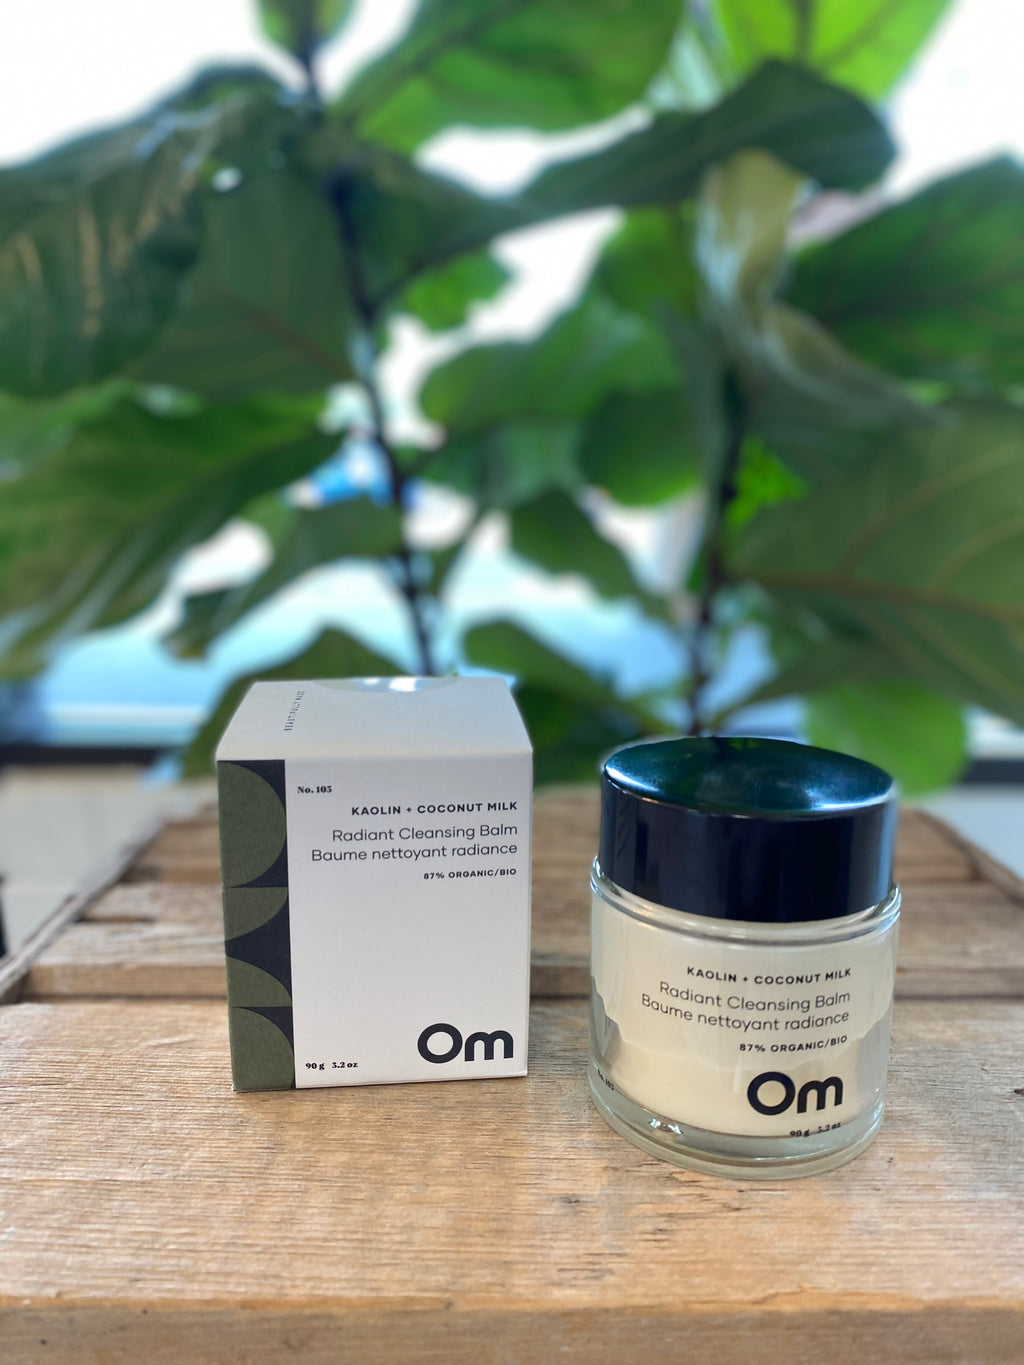 Om Organics - Kaolin + Coconut Milk Radiant Cleansing Balm